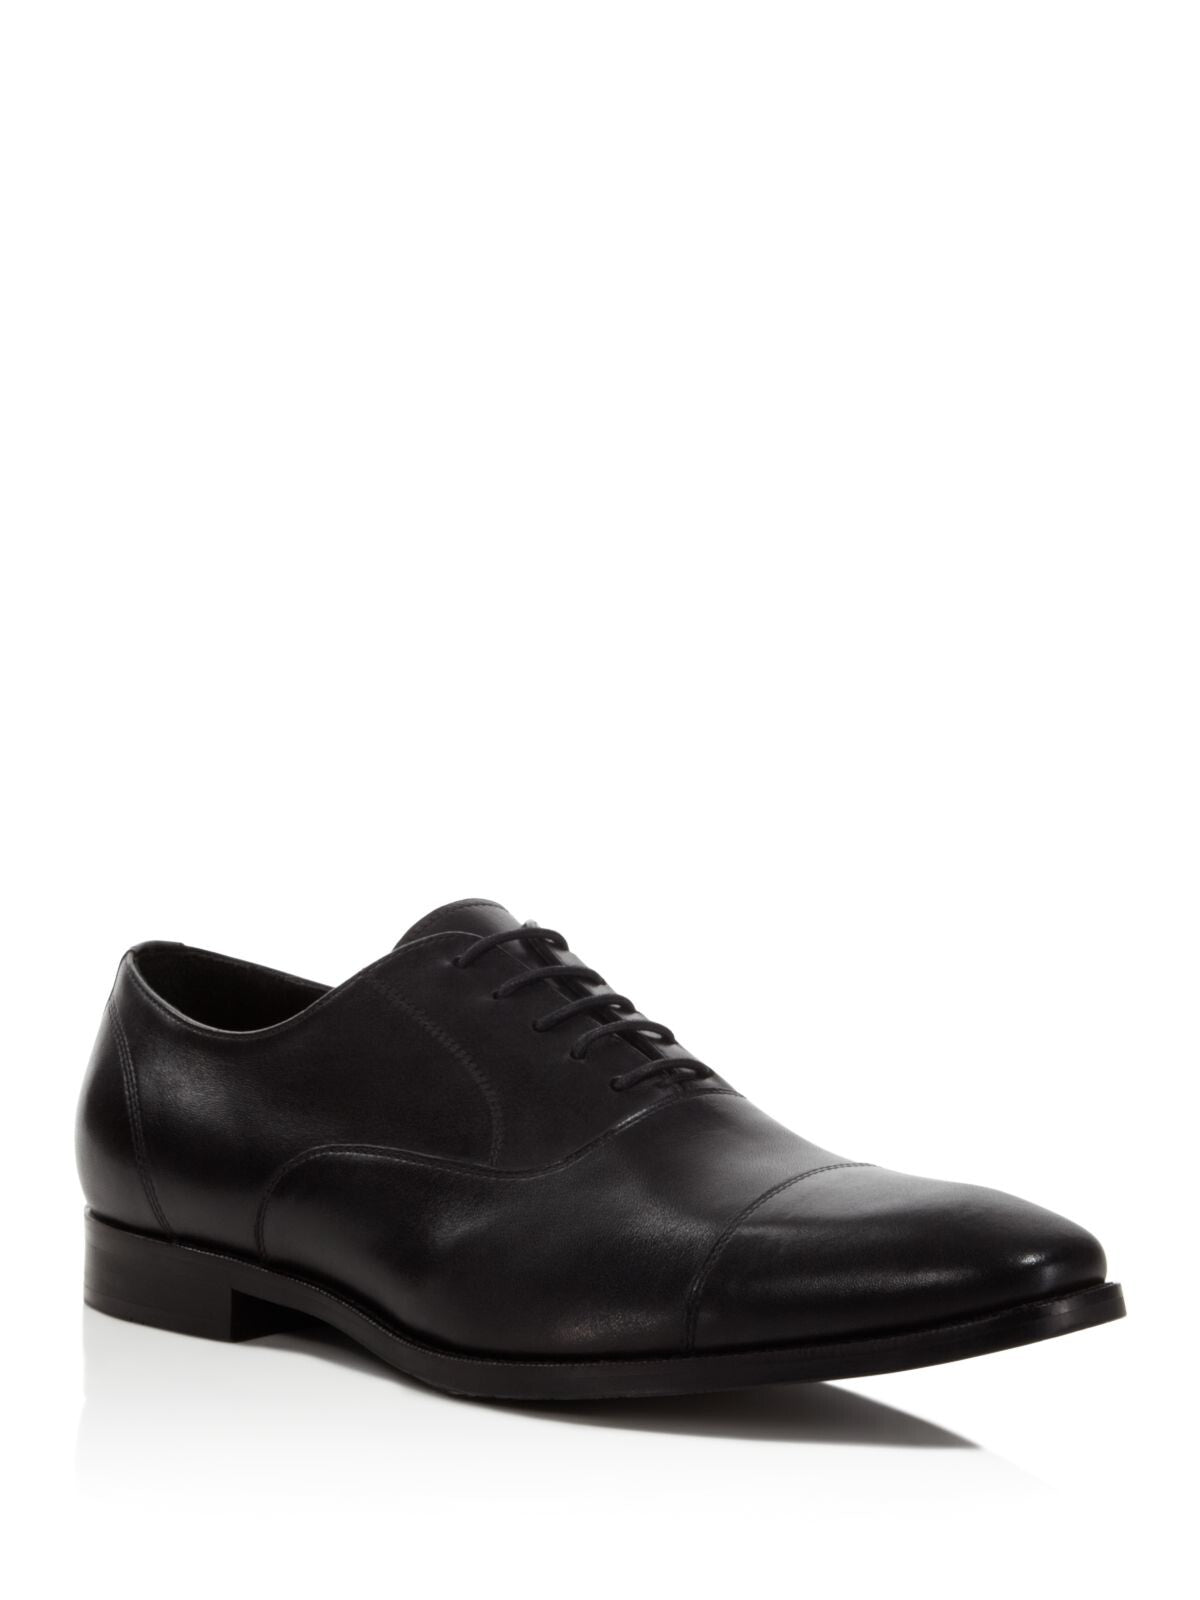 GORDON RUSH Mens Black Comfort Dillon Round Toe Block Heel Lace-Up Leather Oxford Shoes 13